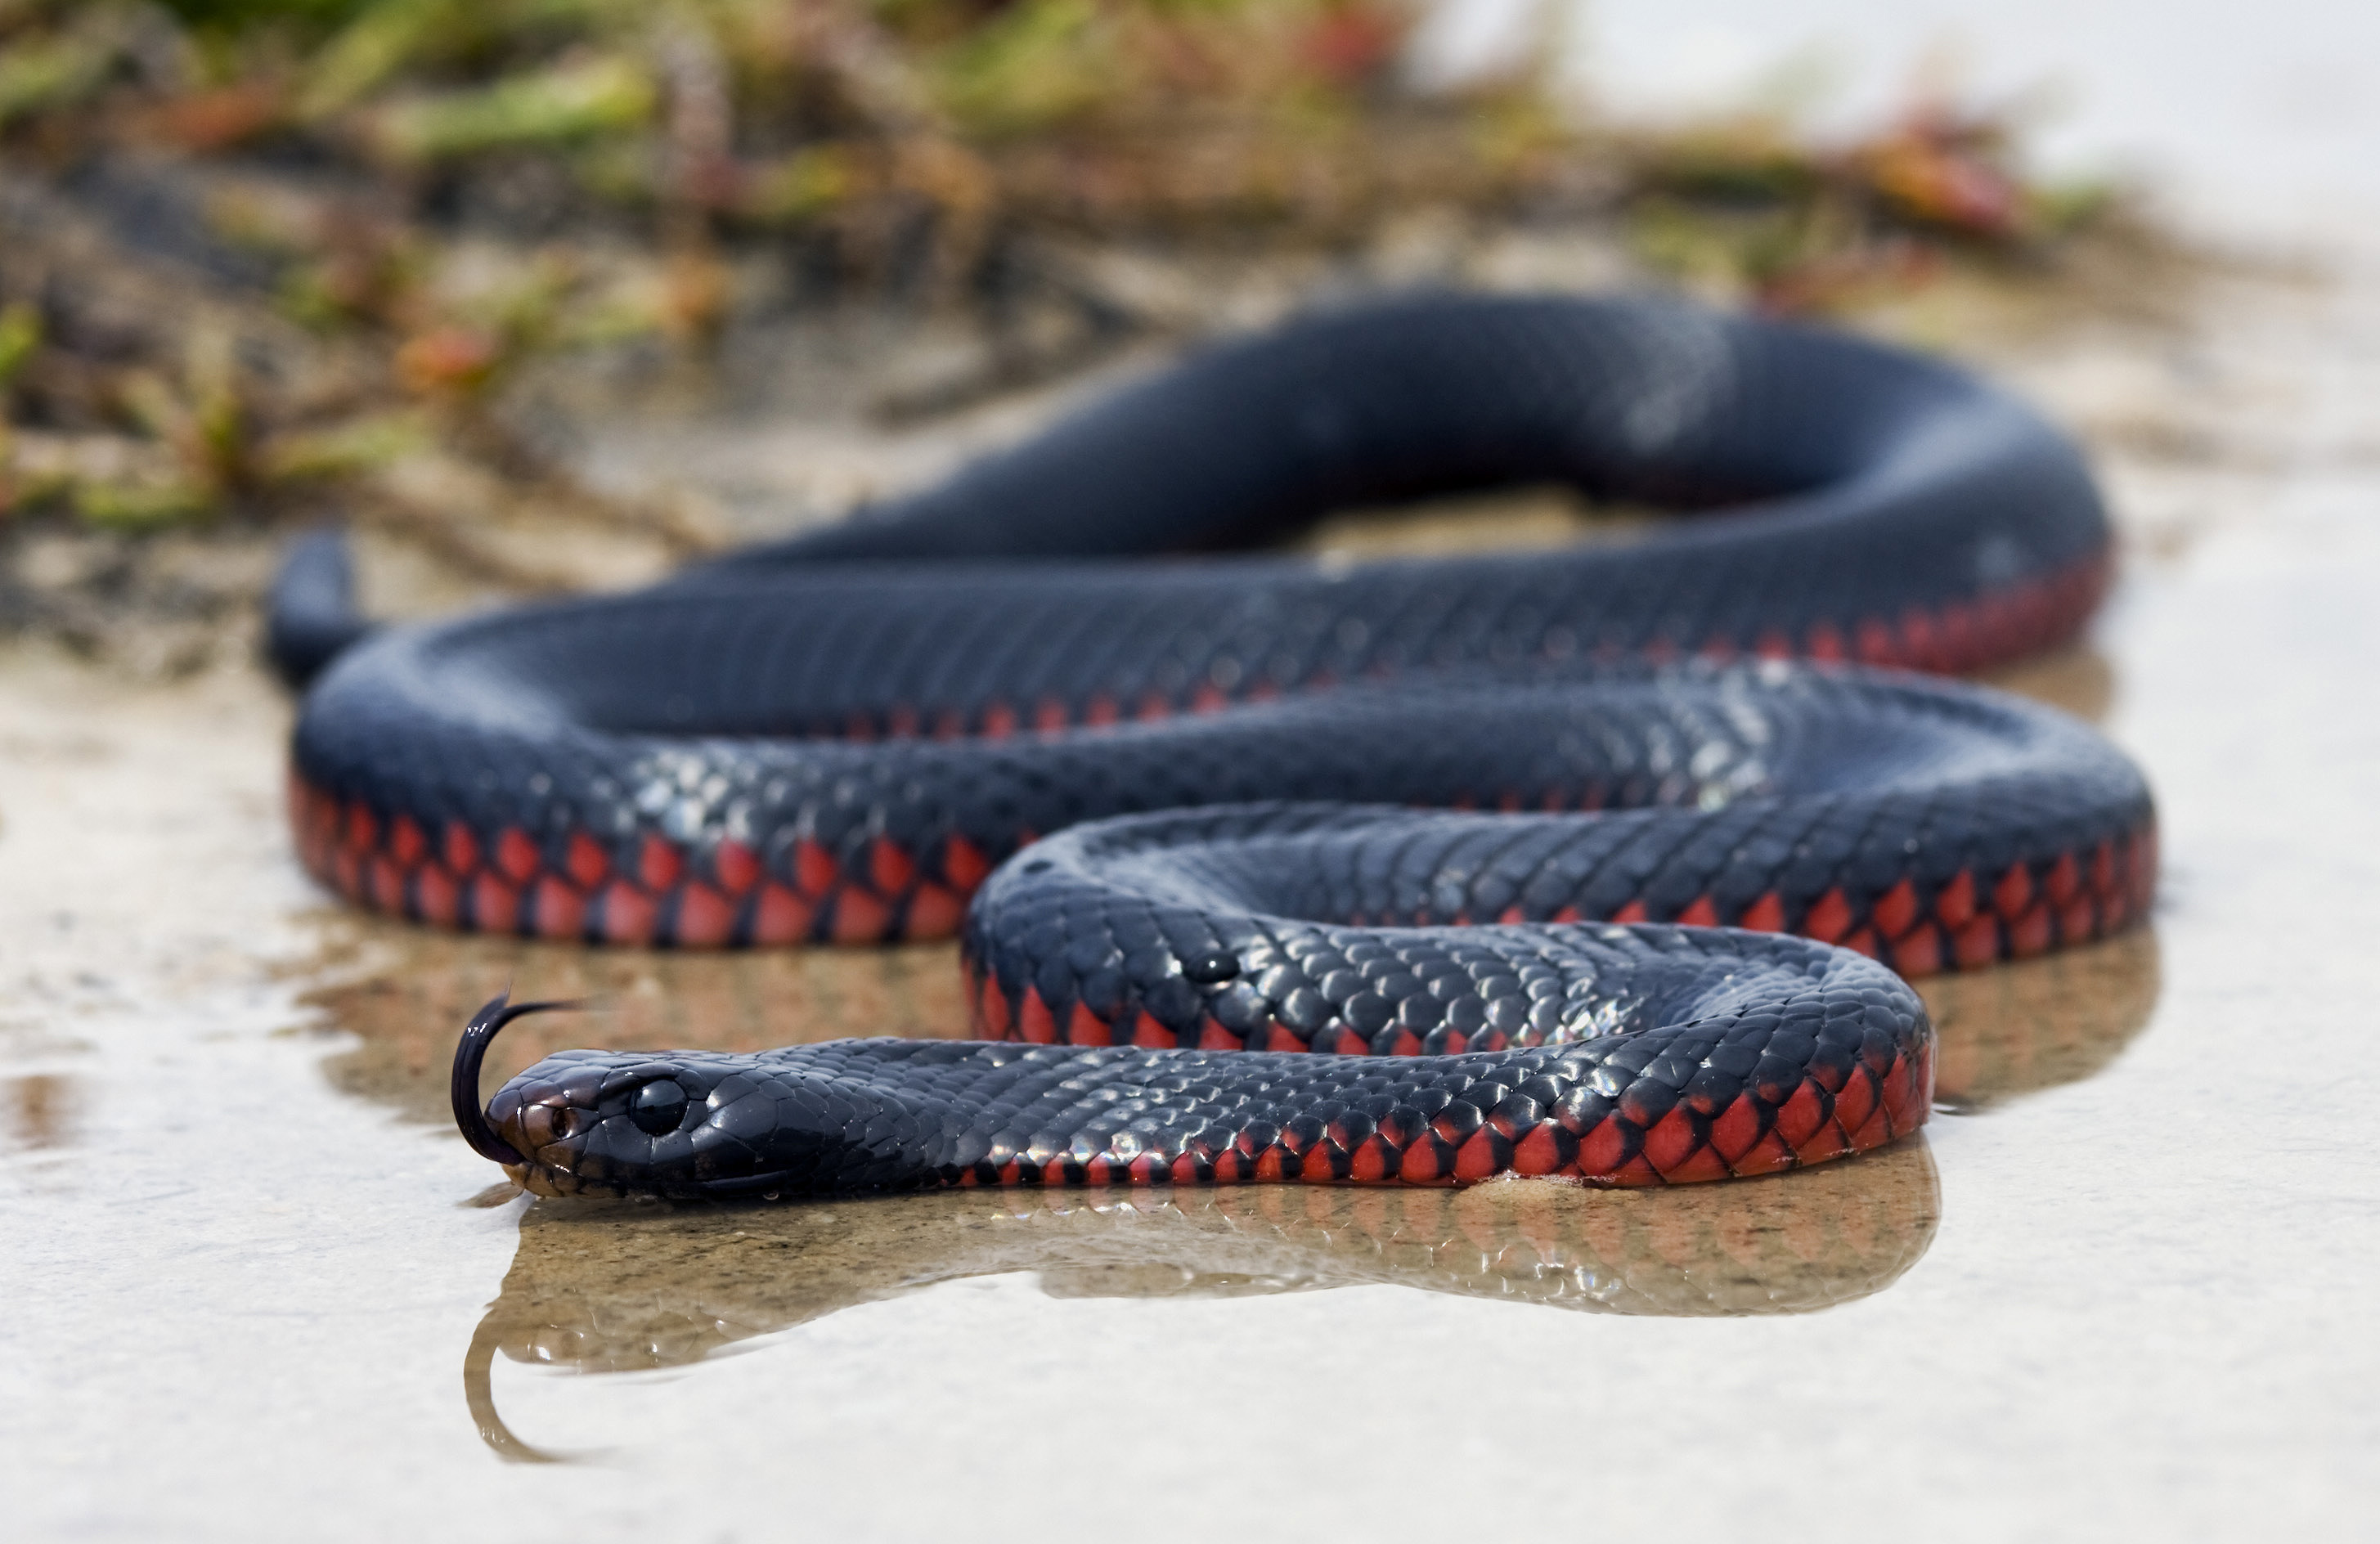 Red-bellied Black Snake #17